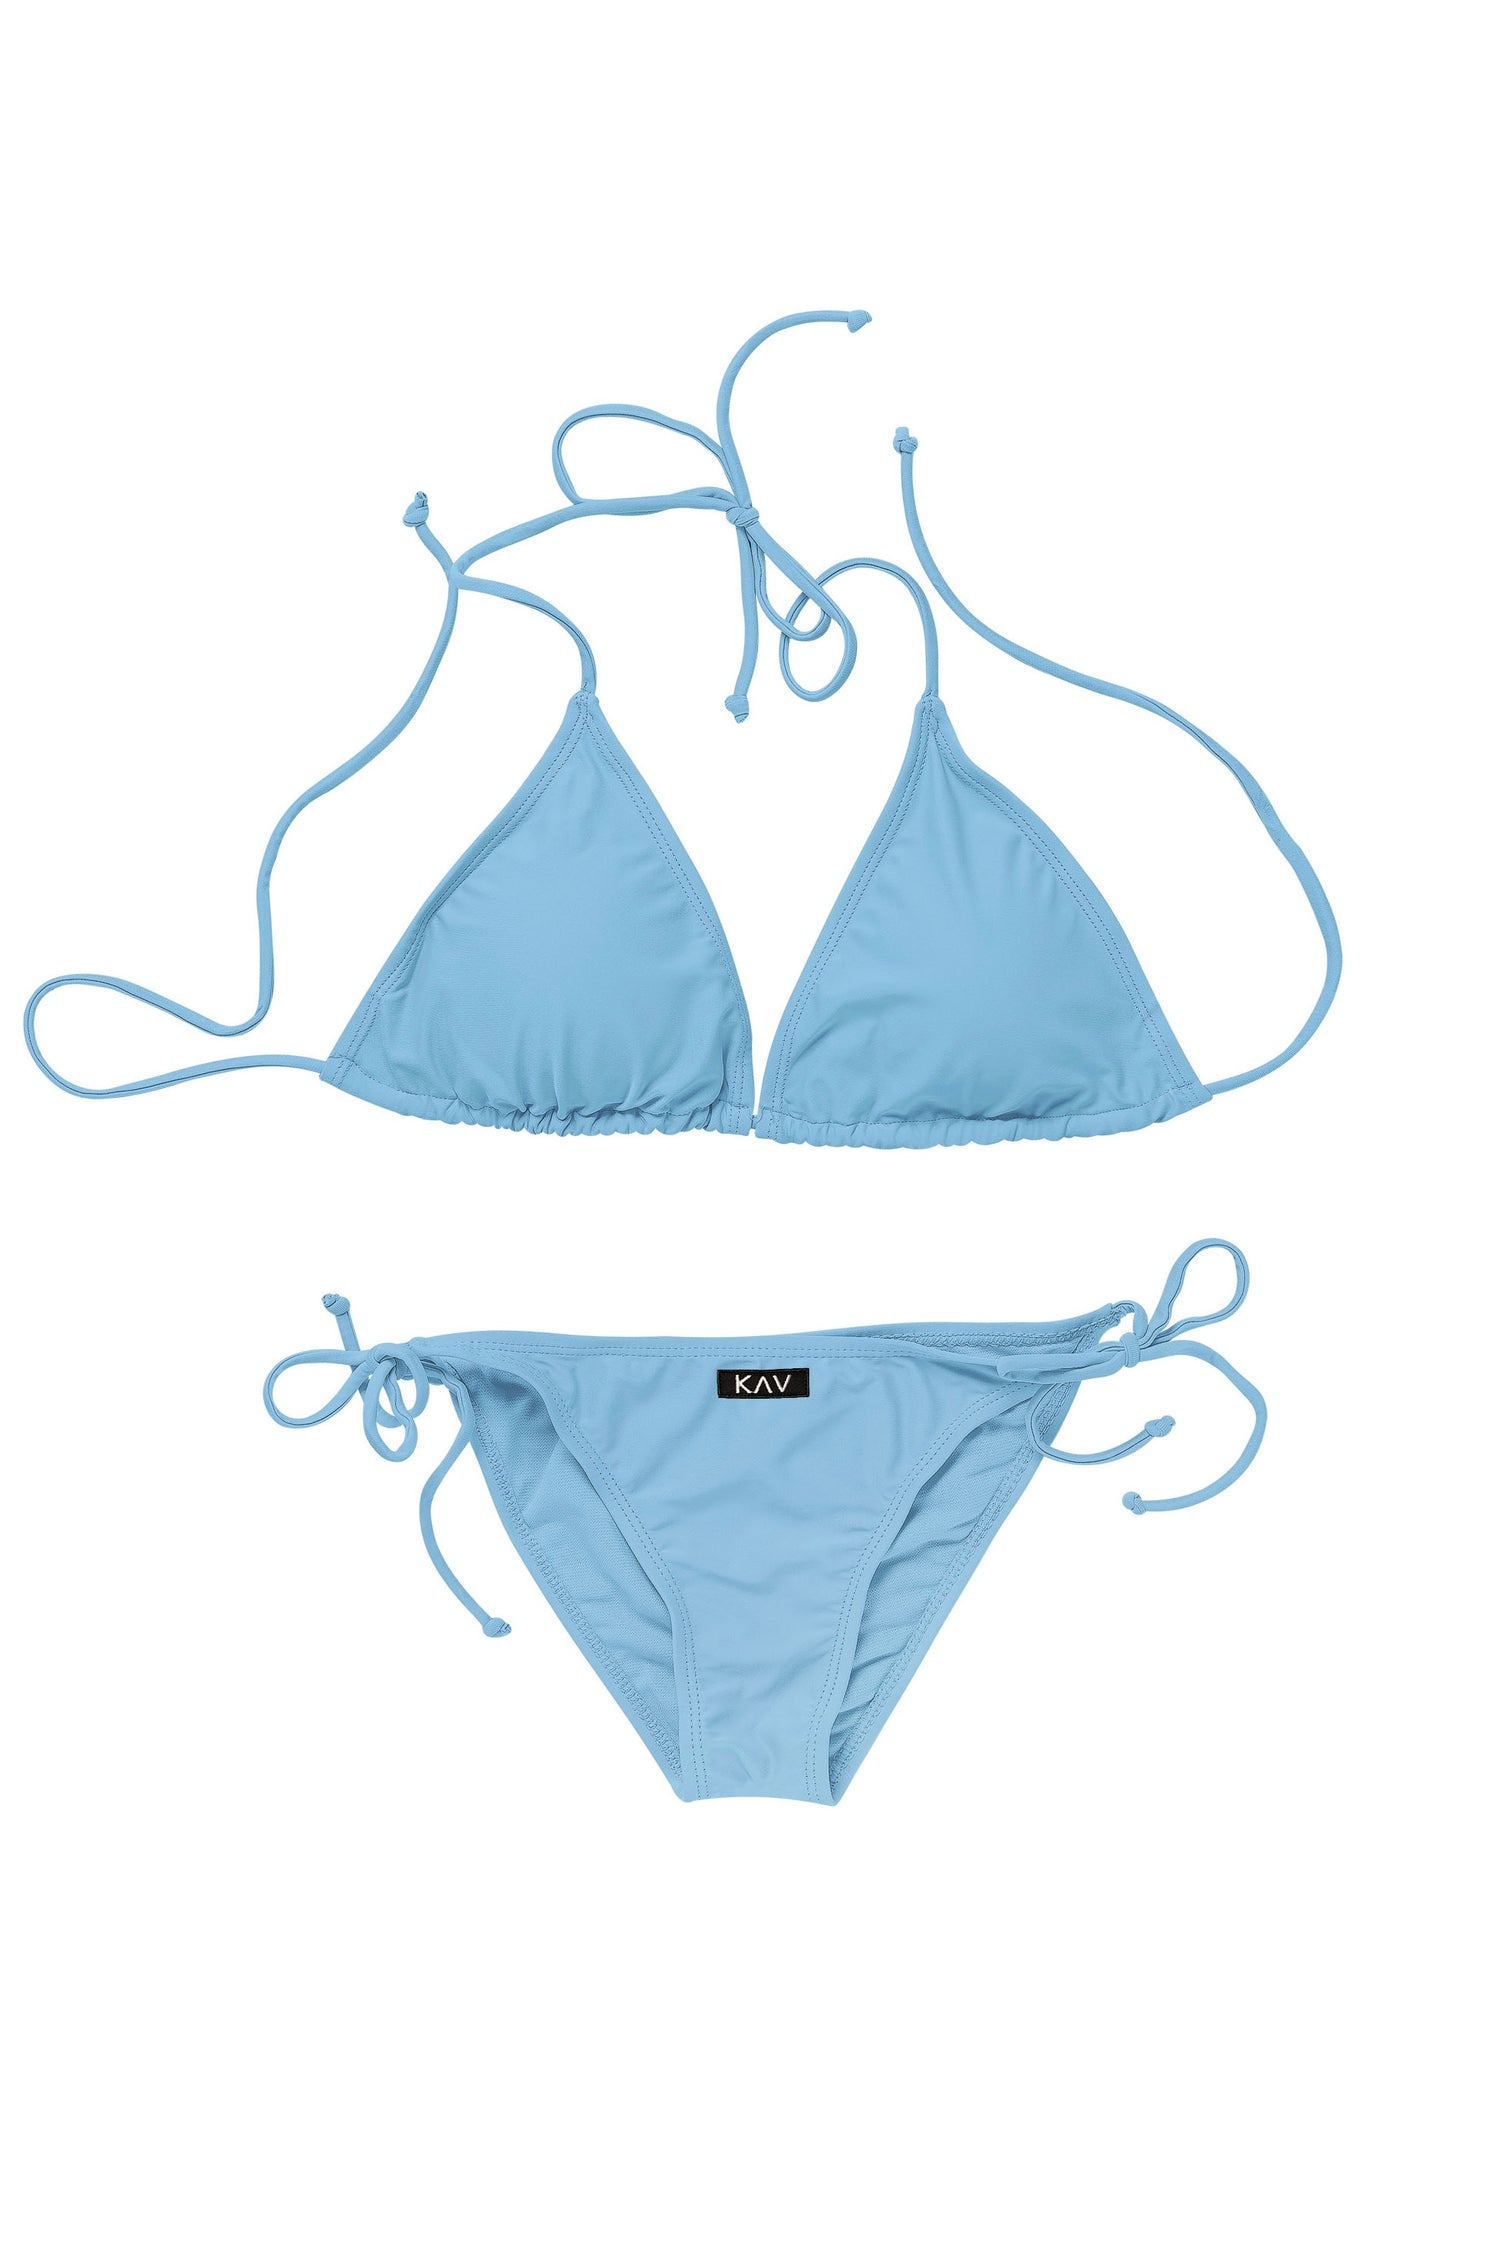 Logo and baby-ribbed blue bikini panties